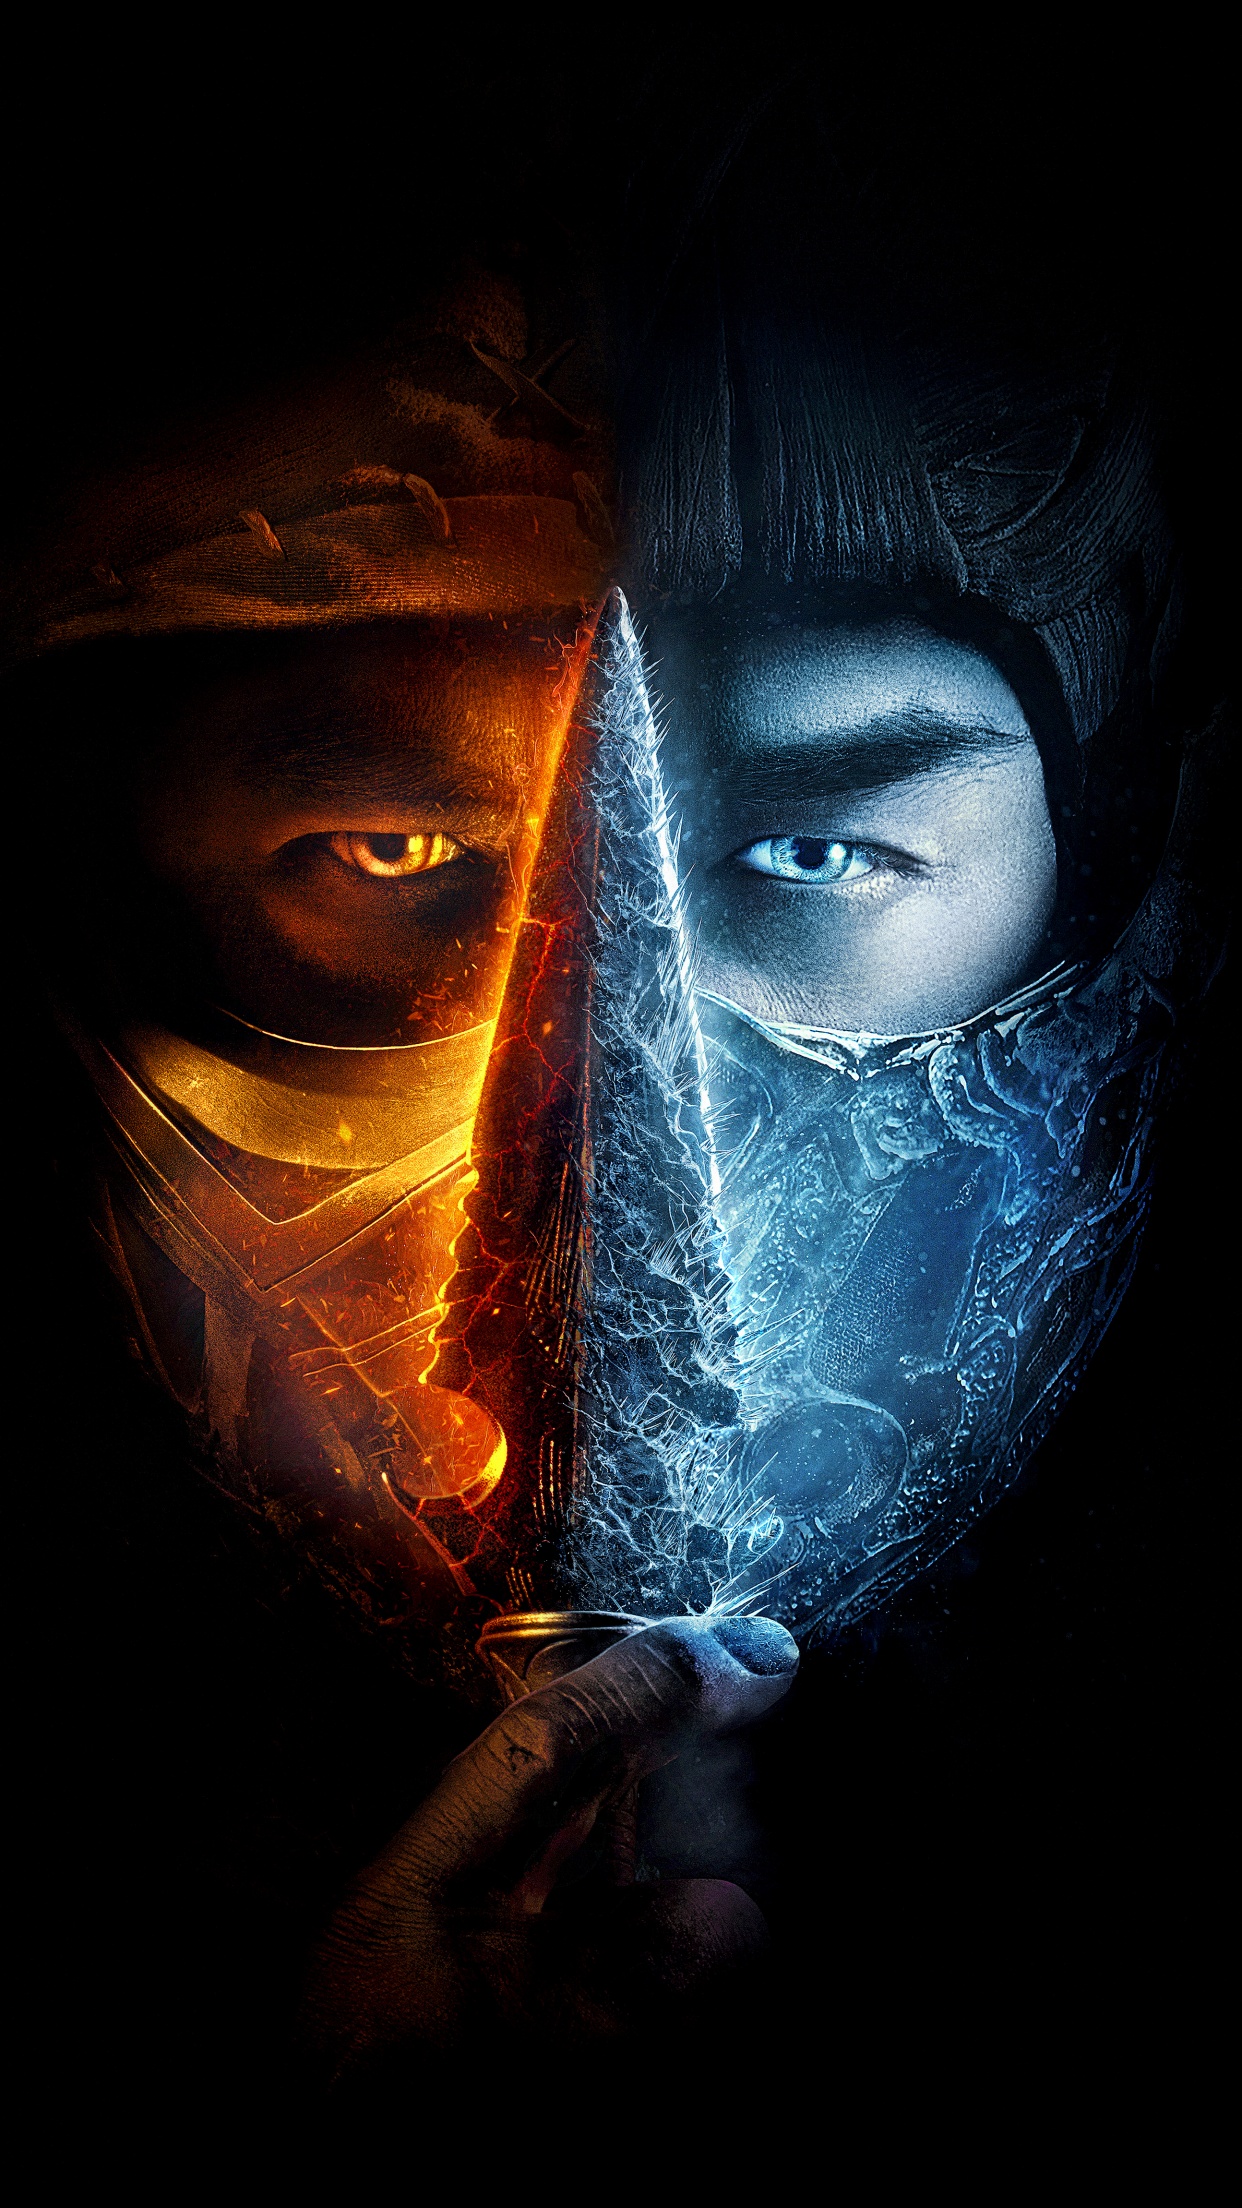 Mortal Kombat Wallpaper 4K, 2021 Movies, Scorpion, Sub-Zero, Black/Dark